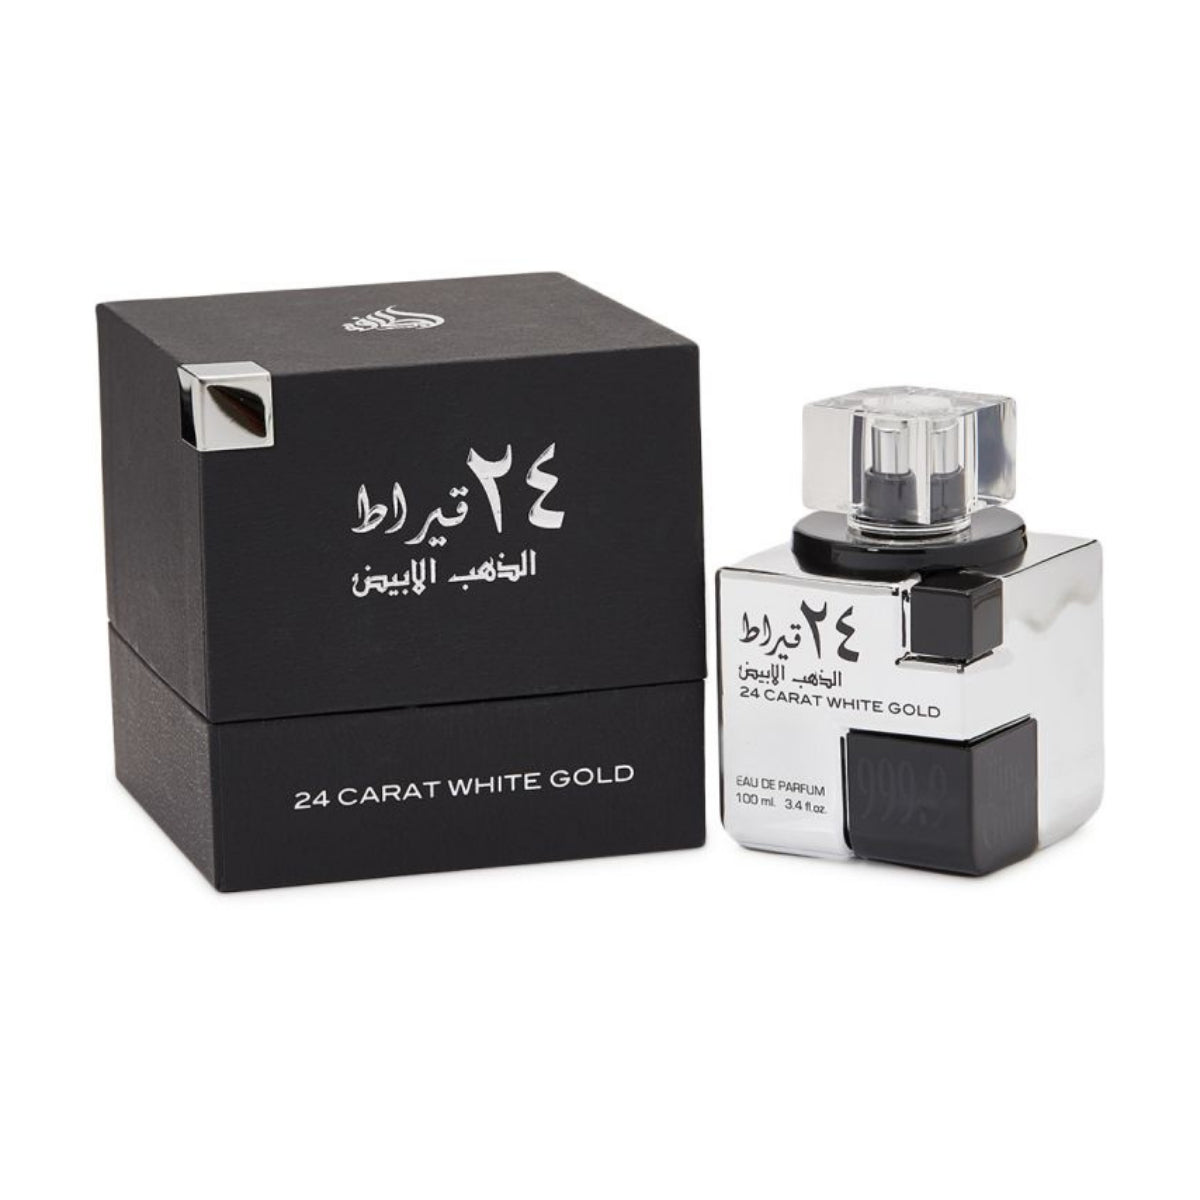 Lattafa 24 Carat White Gold Perfume For Men and Women, EDP, 100ml - samawa perfumes 